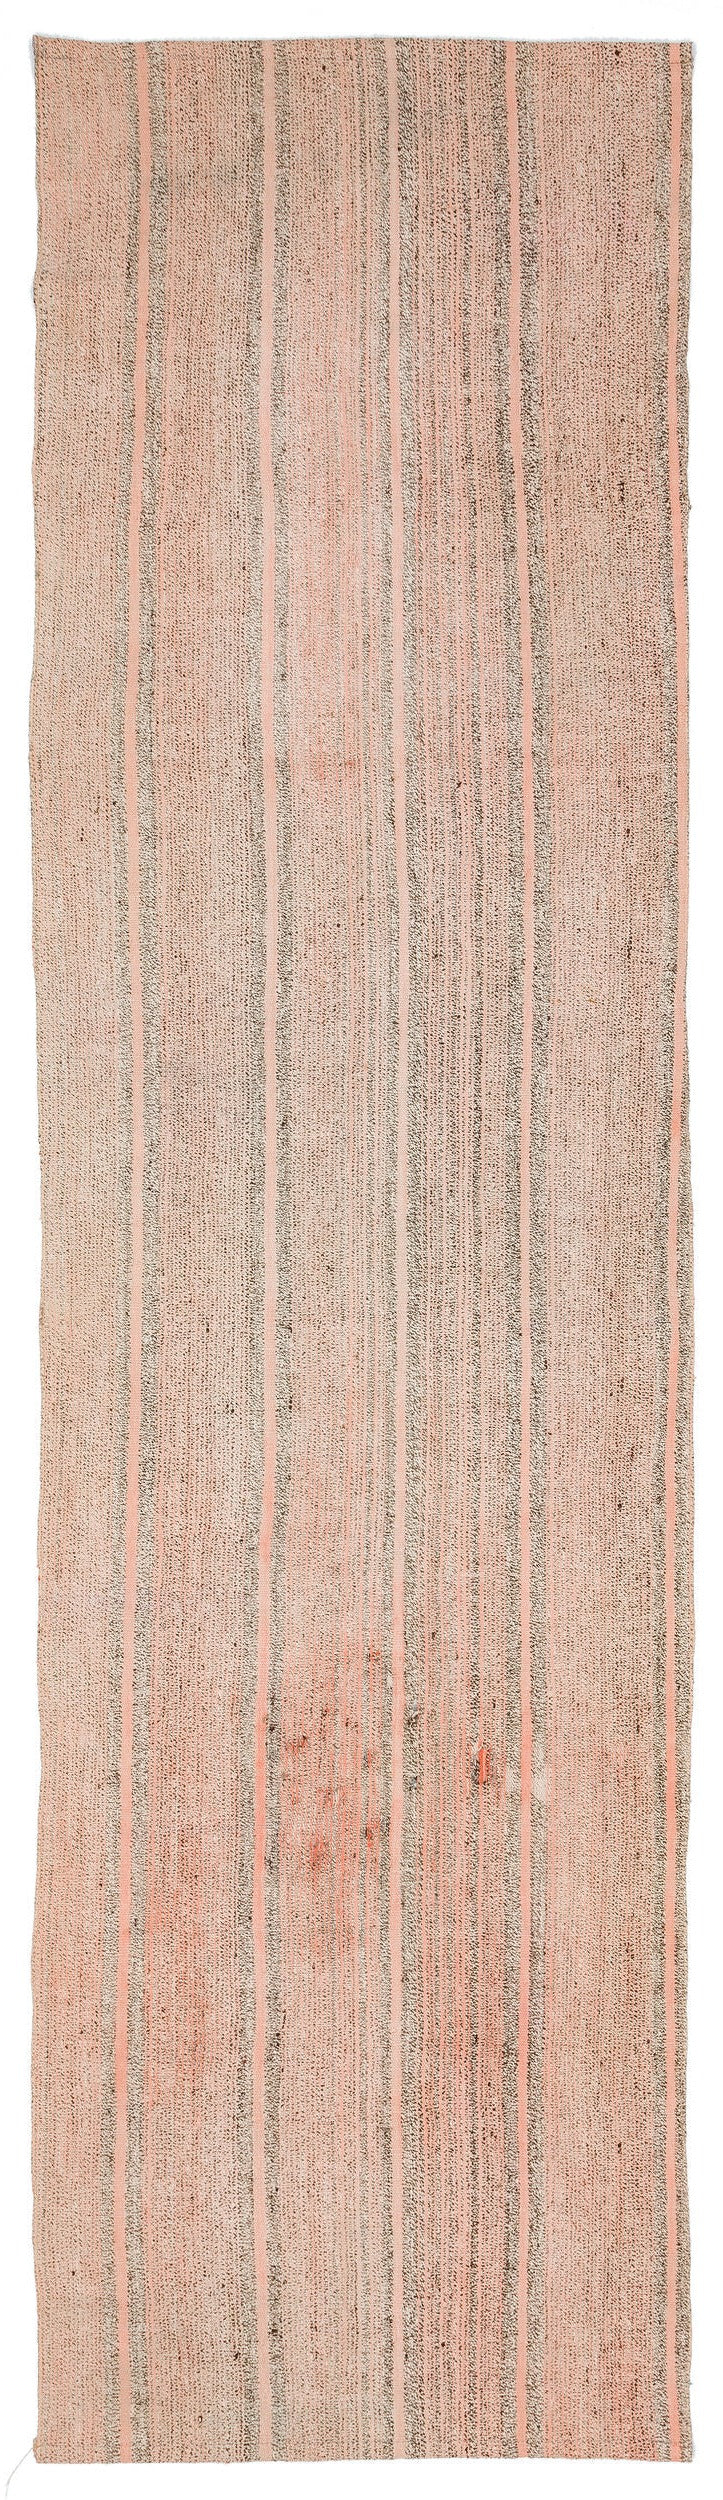 Cretan Beige Striped Wool Hand-Woven Carpet 085 x 322